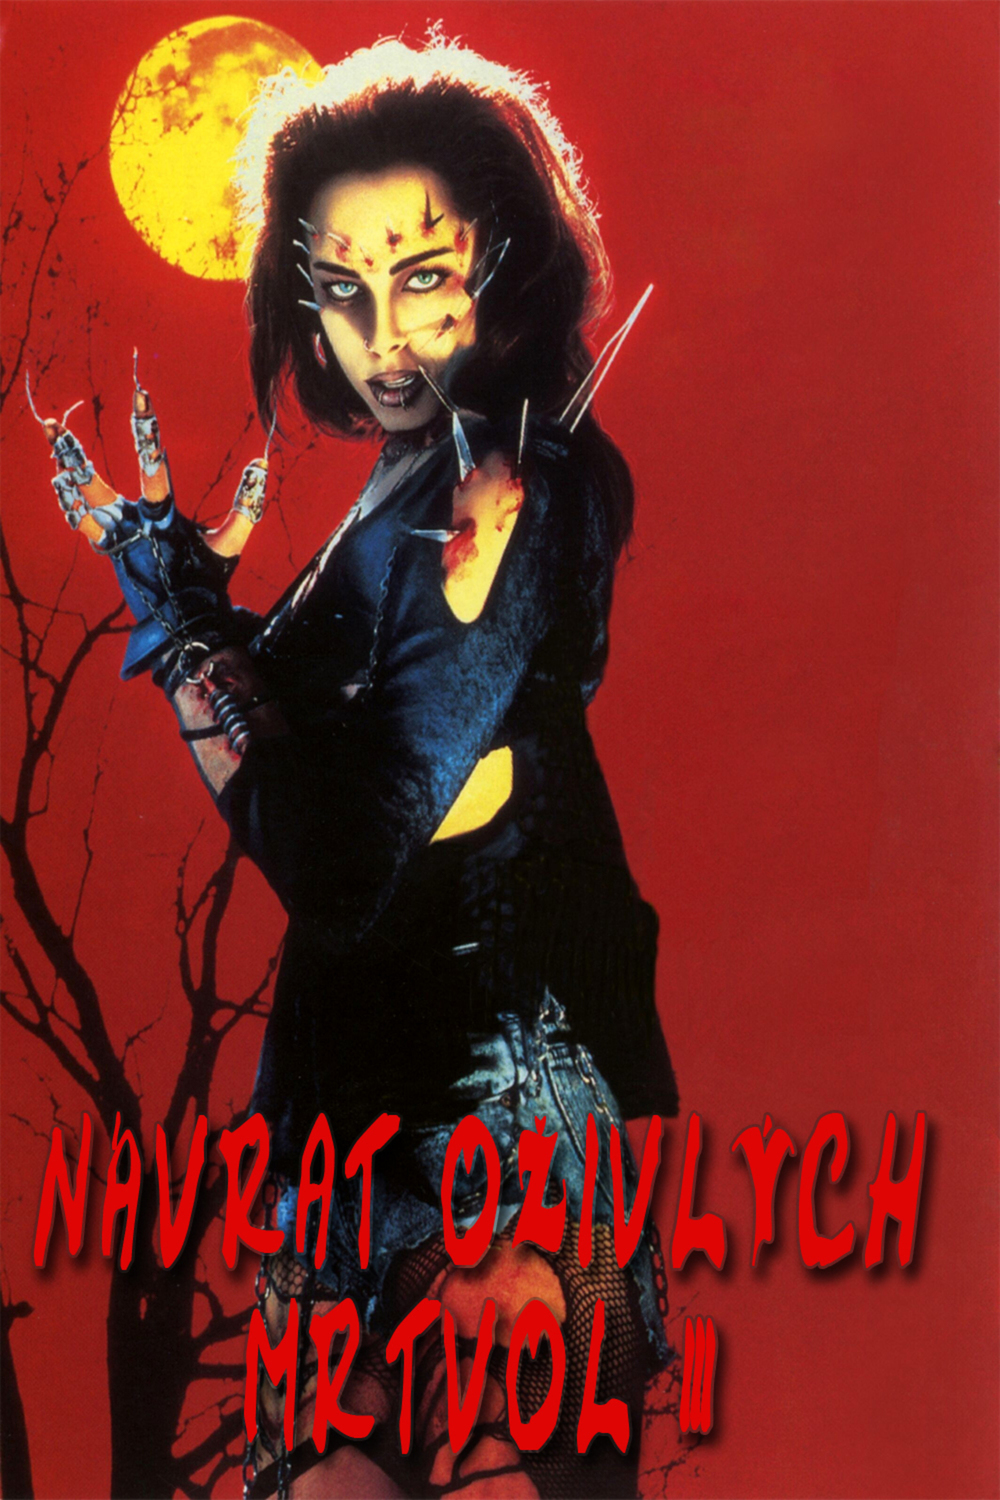 Stiahni si Filmy CZ/SK dabing Navrat zive smrti 3 / Return of the Living Dead III(1993)(CZ) = CSFD 57%